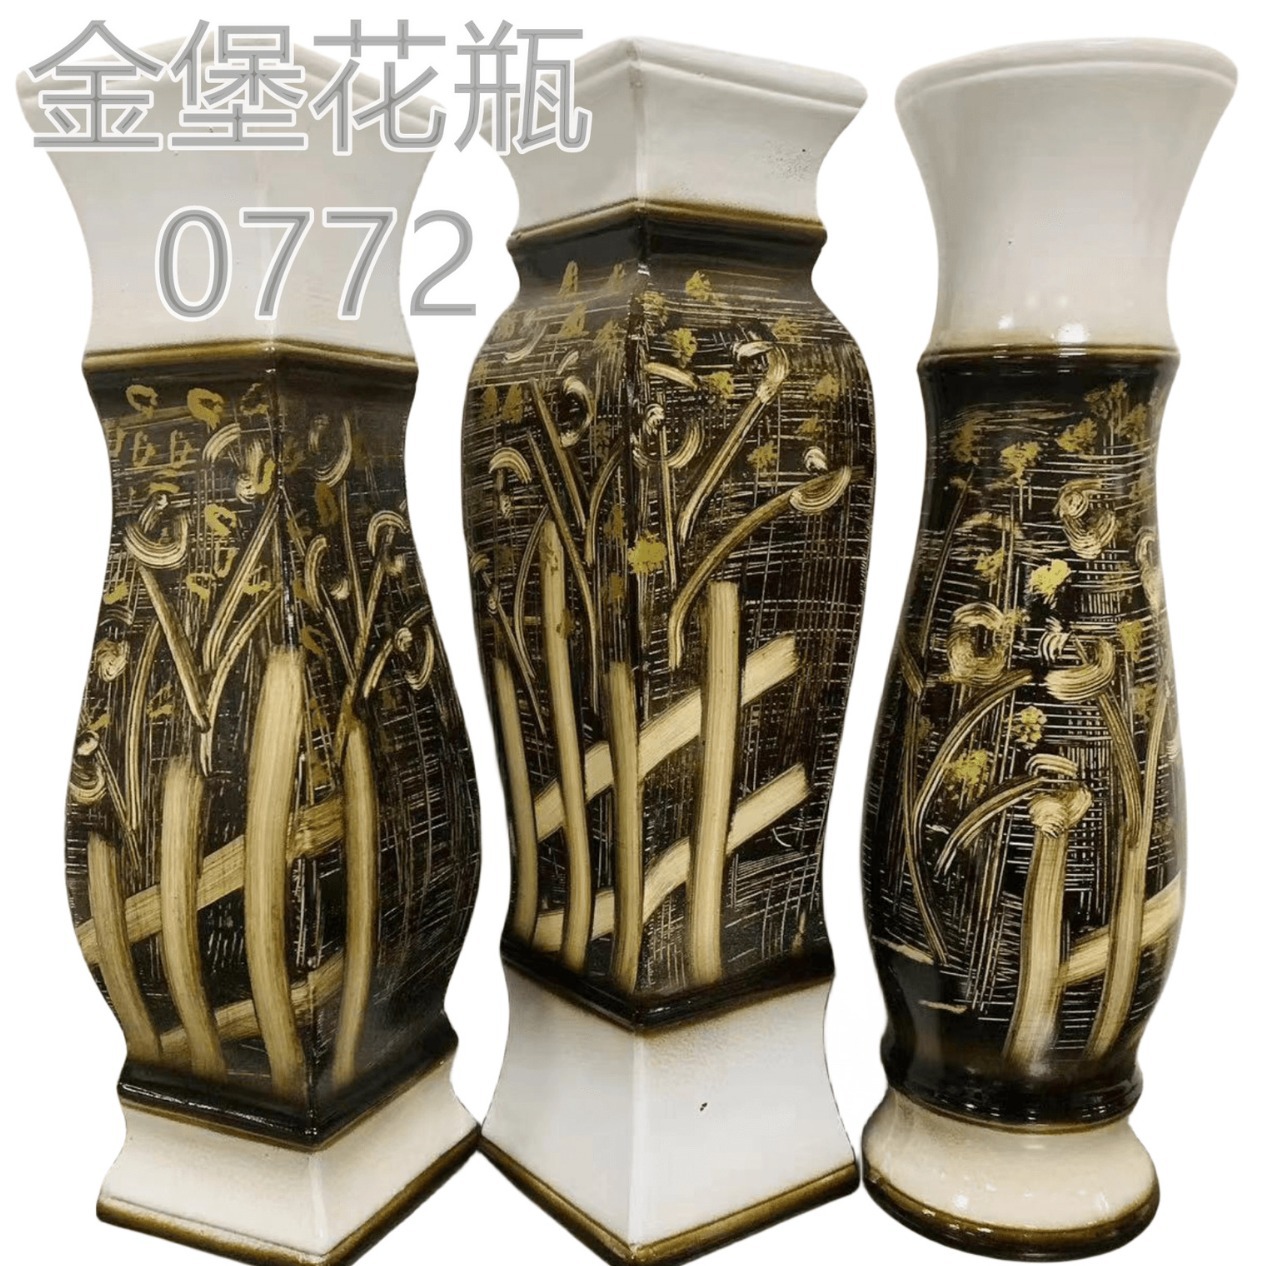 60cn ceramic vase low temperature paint color european style vase home decorations and accessories living room decorations simulation vase 1